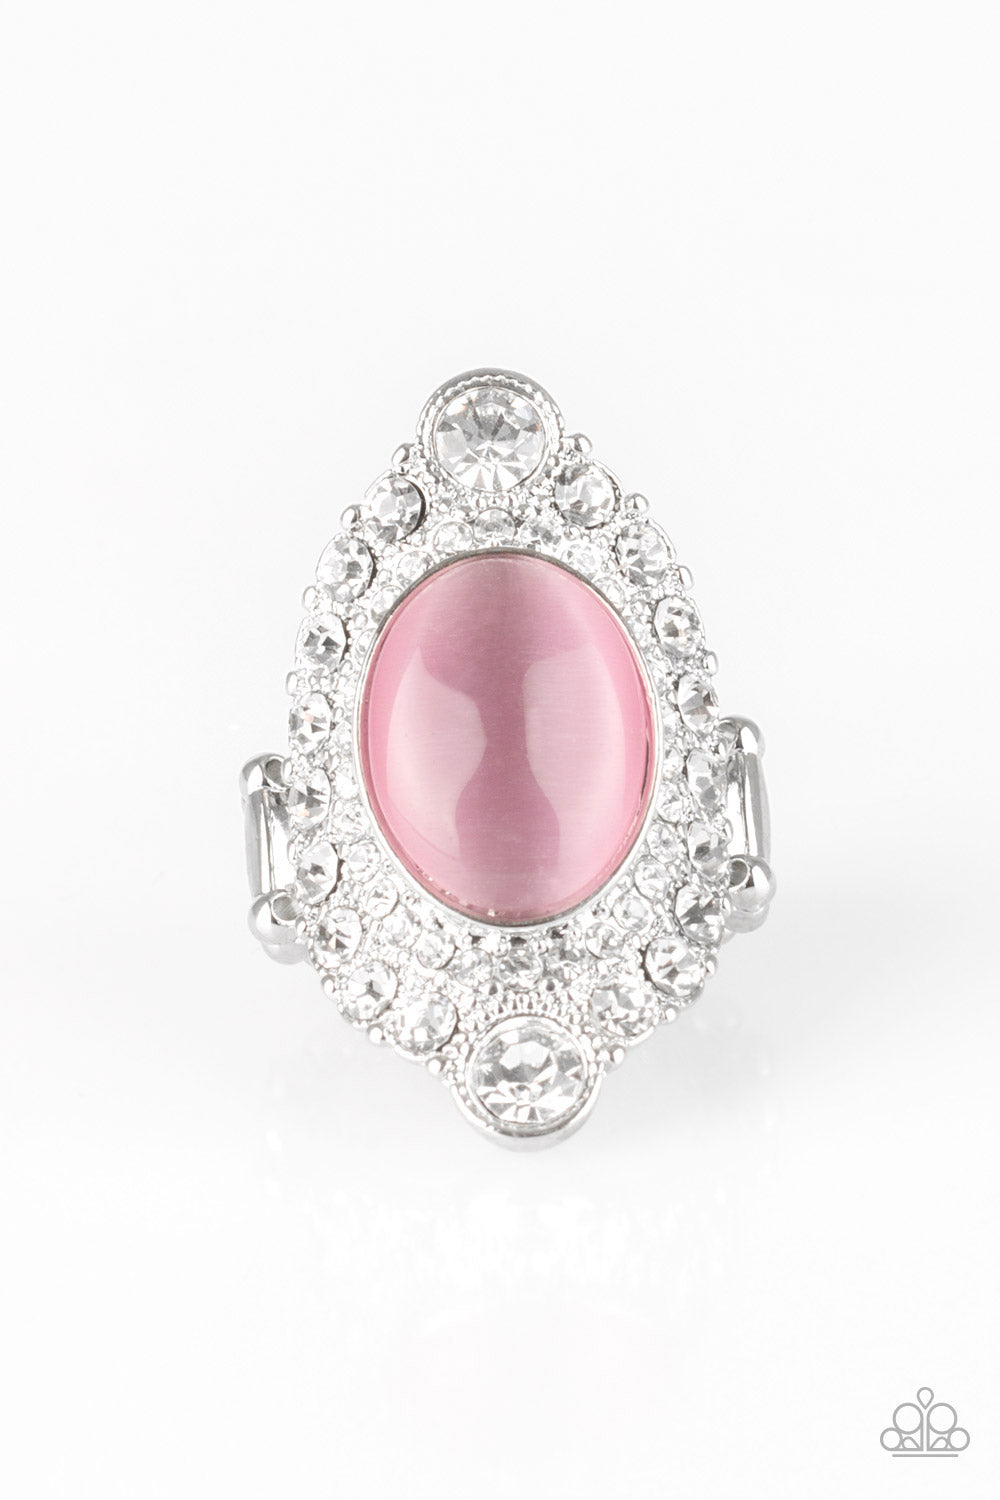 Paparazzi Riviera Royalty - Pink Moonstone - White Rhinestones - Silver Ring - $5 Jewelry With Ashley Swint